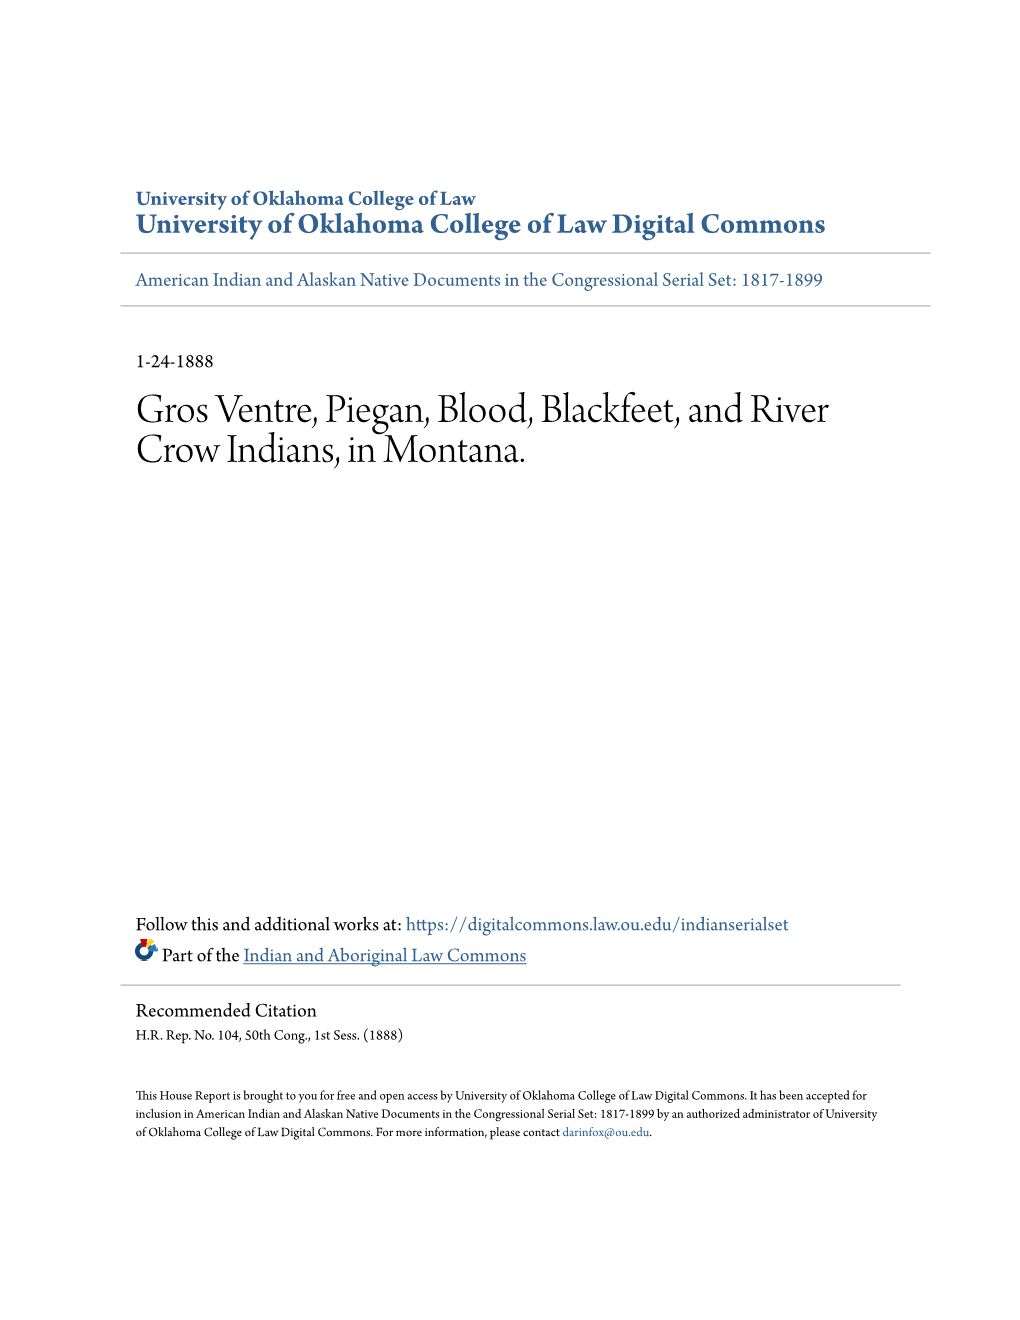 Gros Ventre, Piegan, Blood, Blackfeet, and River Crow Indians, in Montana